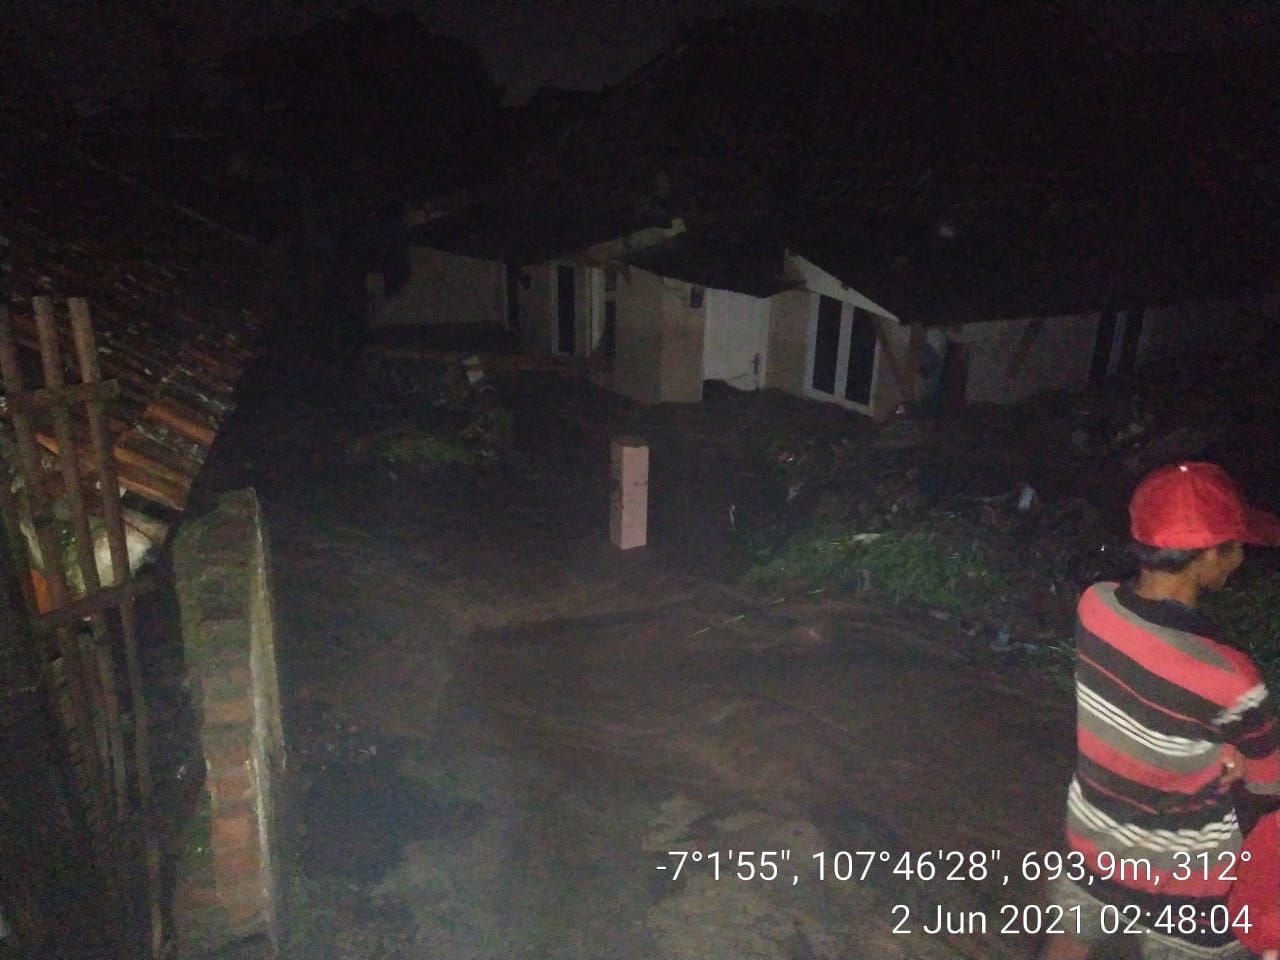 40 rumah warga terendam akibat tanggul jebol di Desa Panyadap, Kecamatan Solokan Jeruk, Kabupaten Bandung, Selasa 1 Juni 2021 malam.